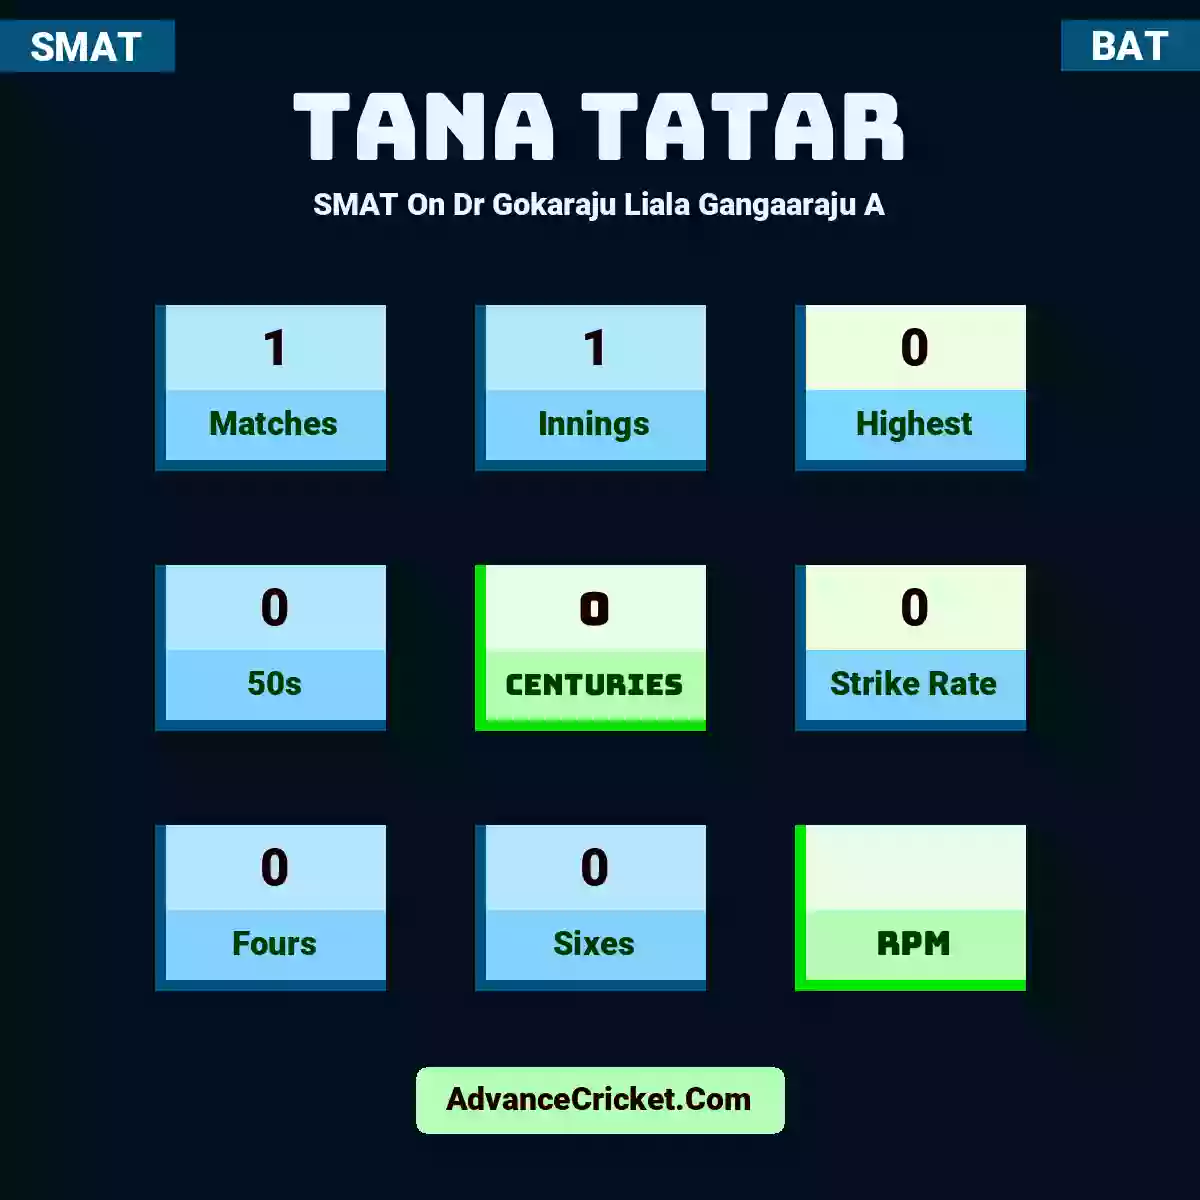 Tana Tatar SMAT  On Dr Gokaraju Liala Gangaaraju A, Tana Tatar played 1 matches, scored 0 runs as highest, 0 half-centuries, and 0 centuries, with a strike rate of 0. T.Tatar hit 0 fours and 0 sixes.